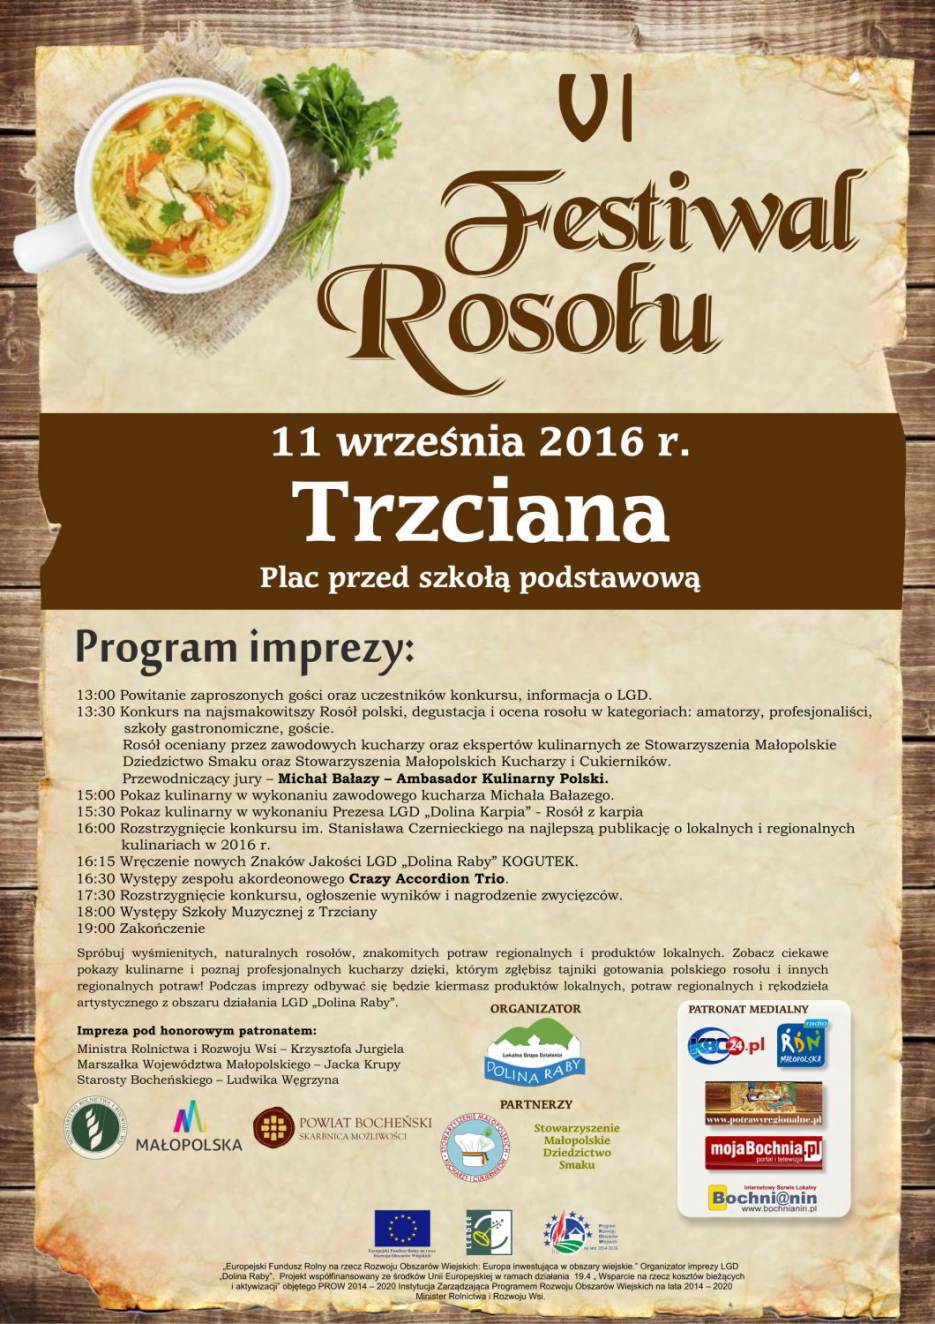 VI Festiwal Rosou - Trzciana - 11.09.2016 r.